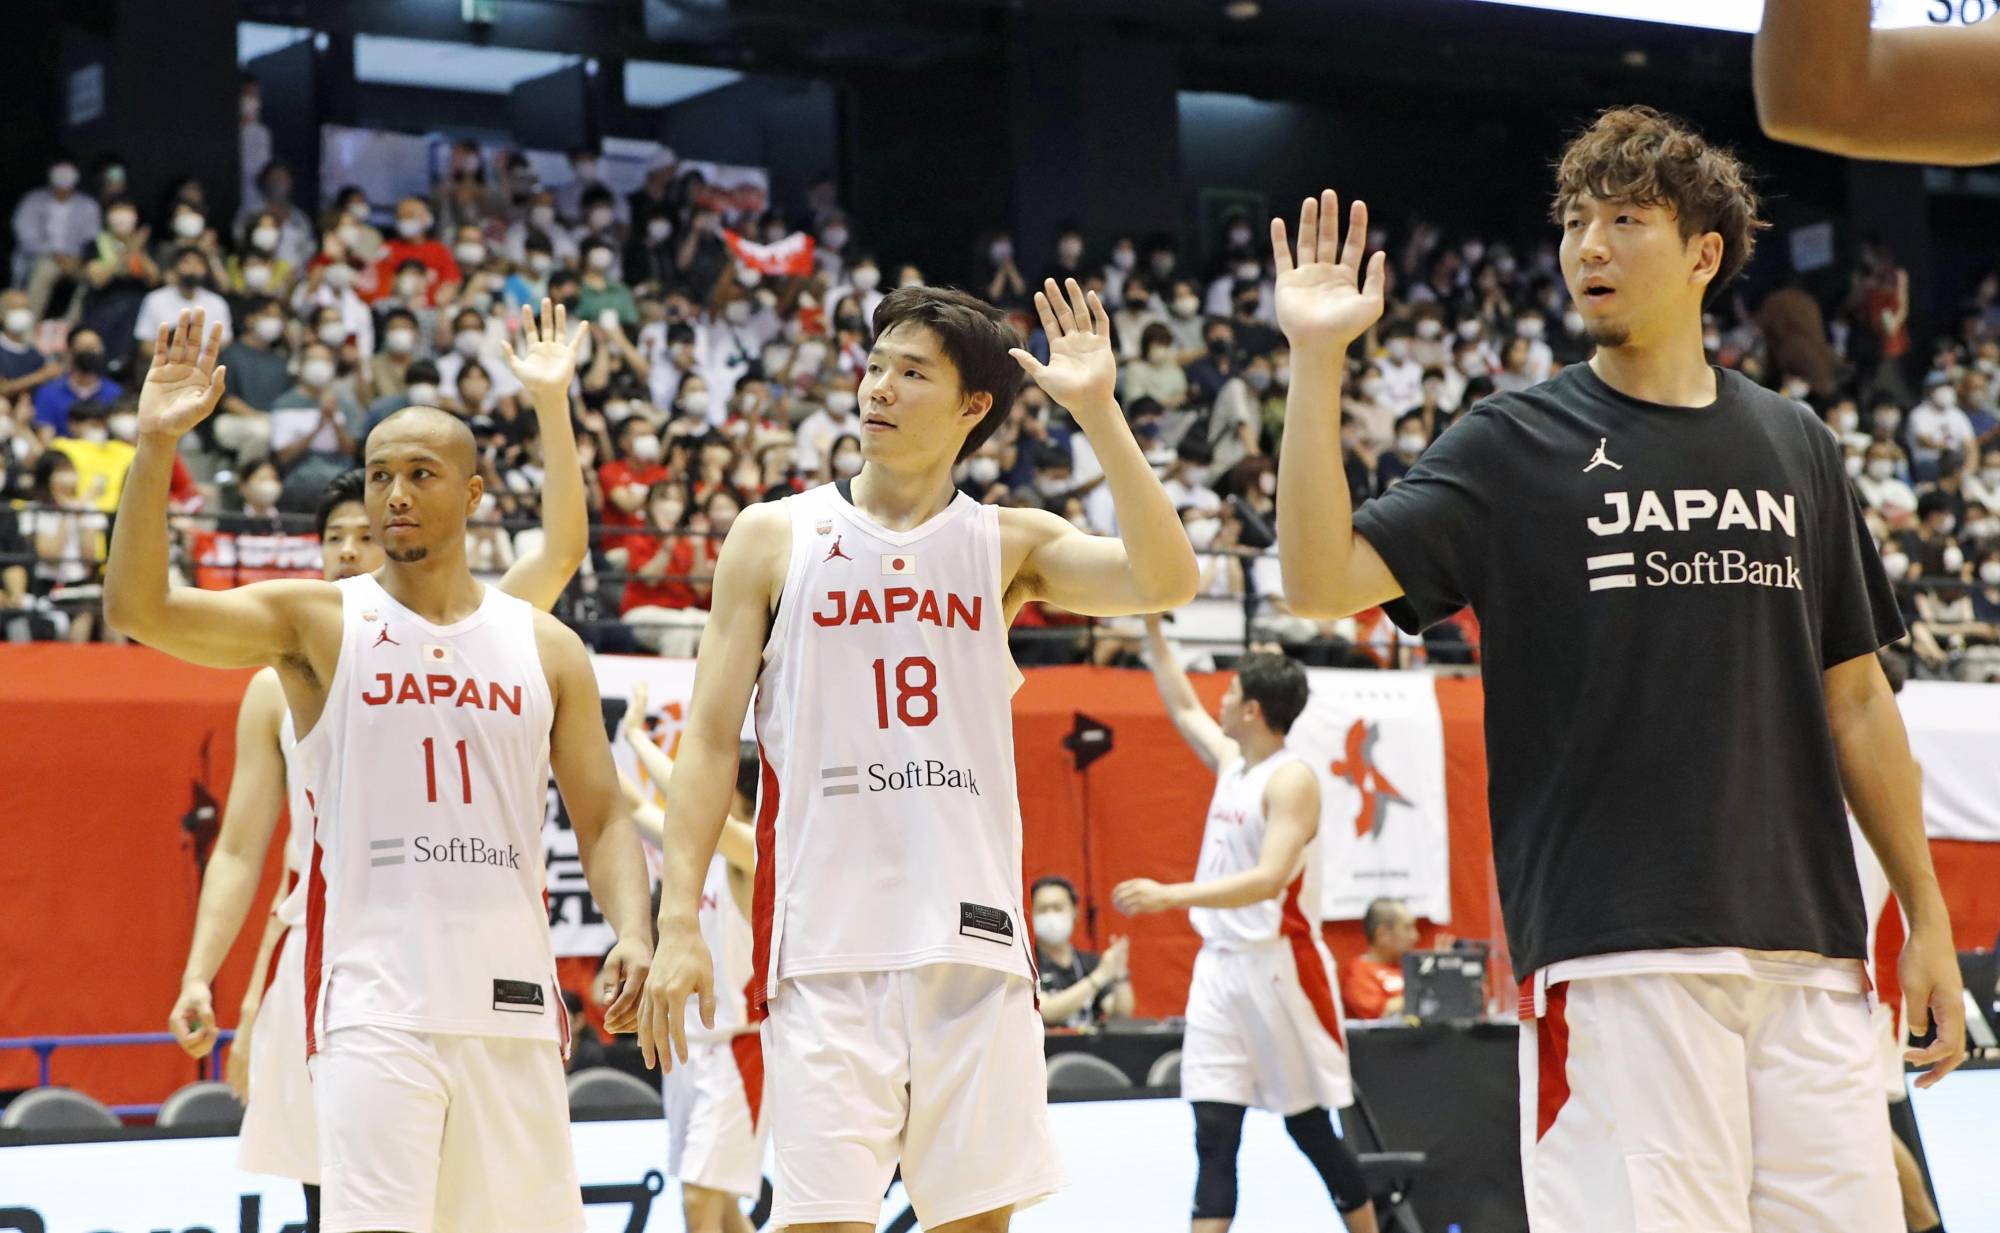 Yudai Baba tops scoring as Japan blows out Iran to sweep series - The ...